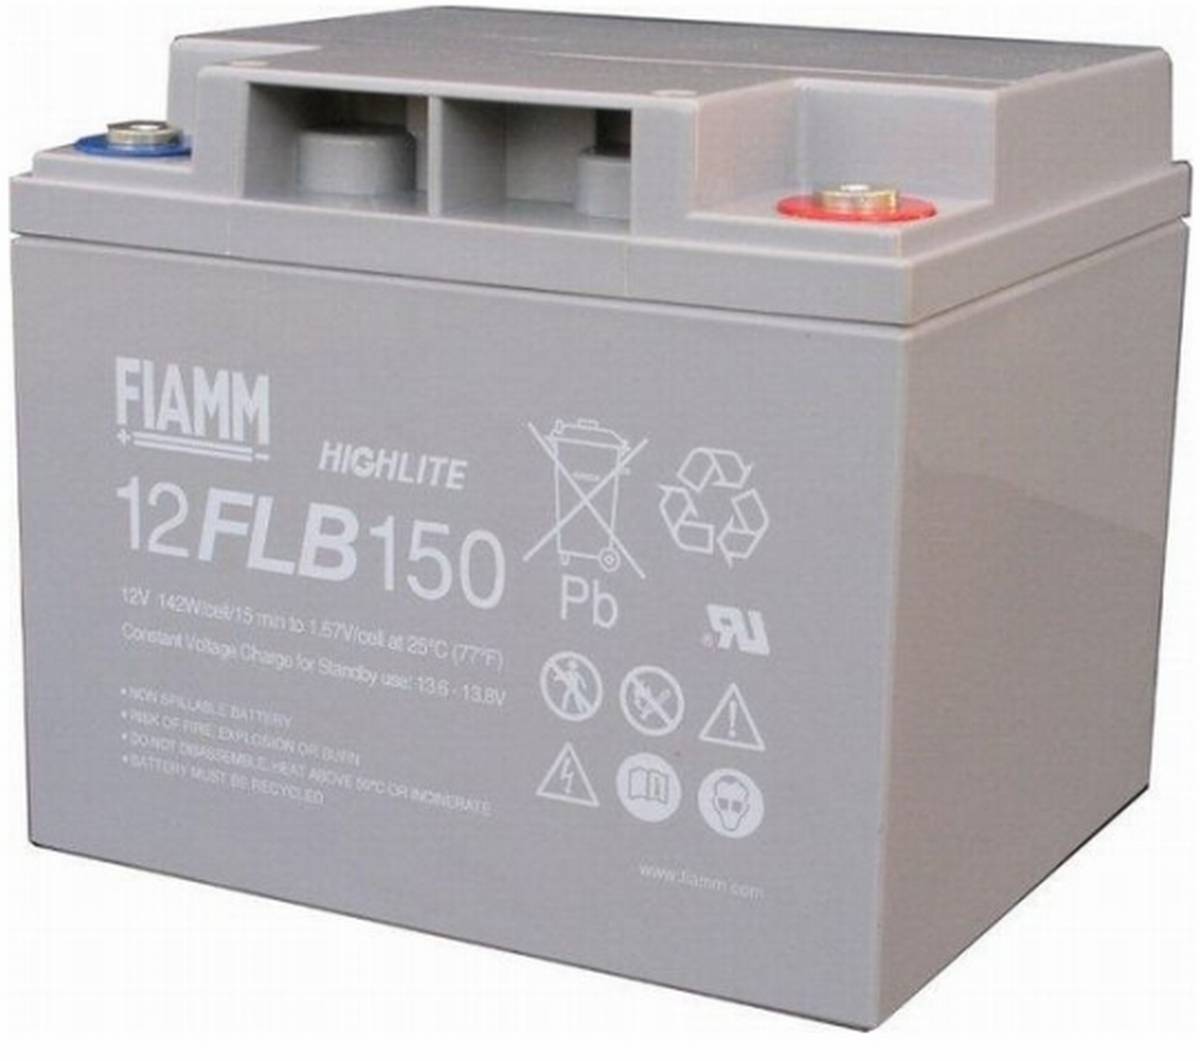 Batteria Fiamm HighLite 12FLB150P 12V 40Ah AGM al piombo 10-12 anni